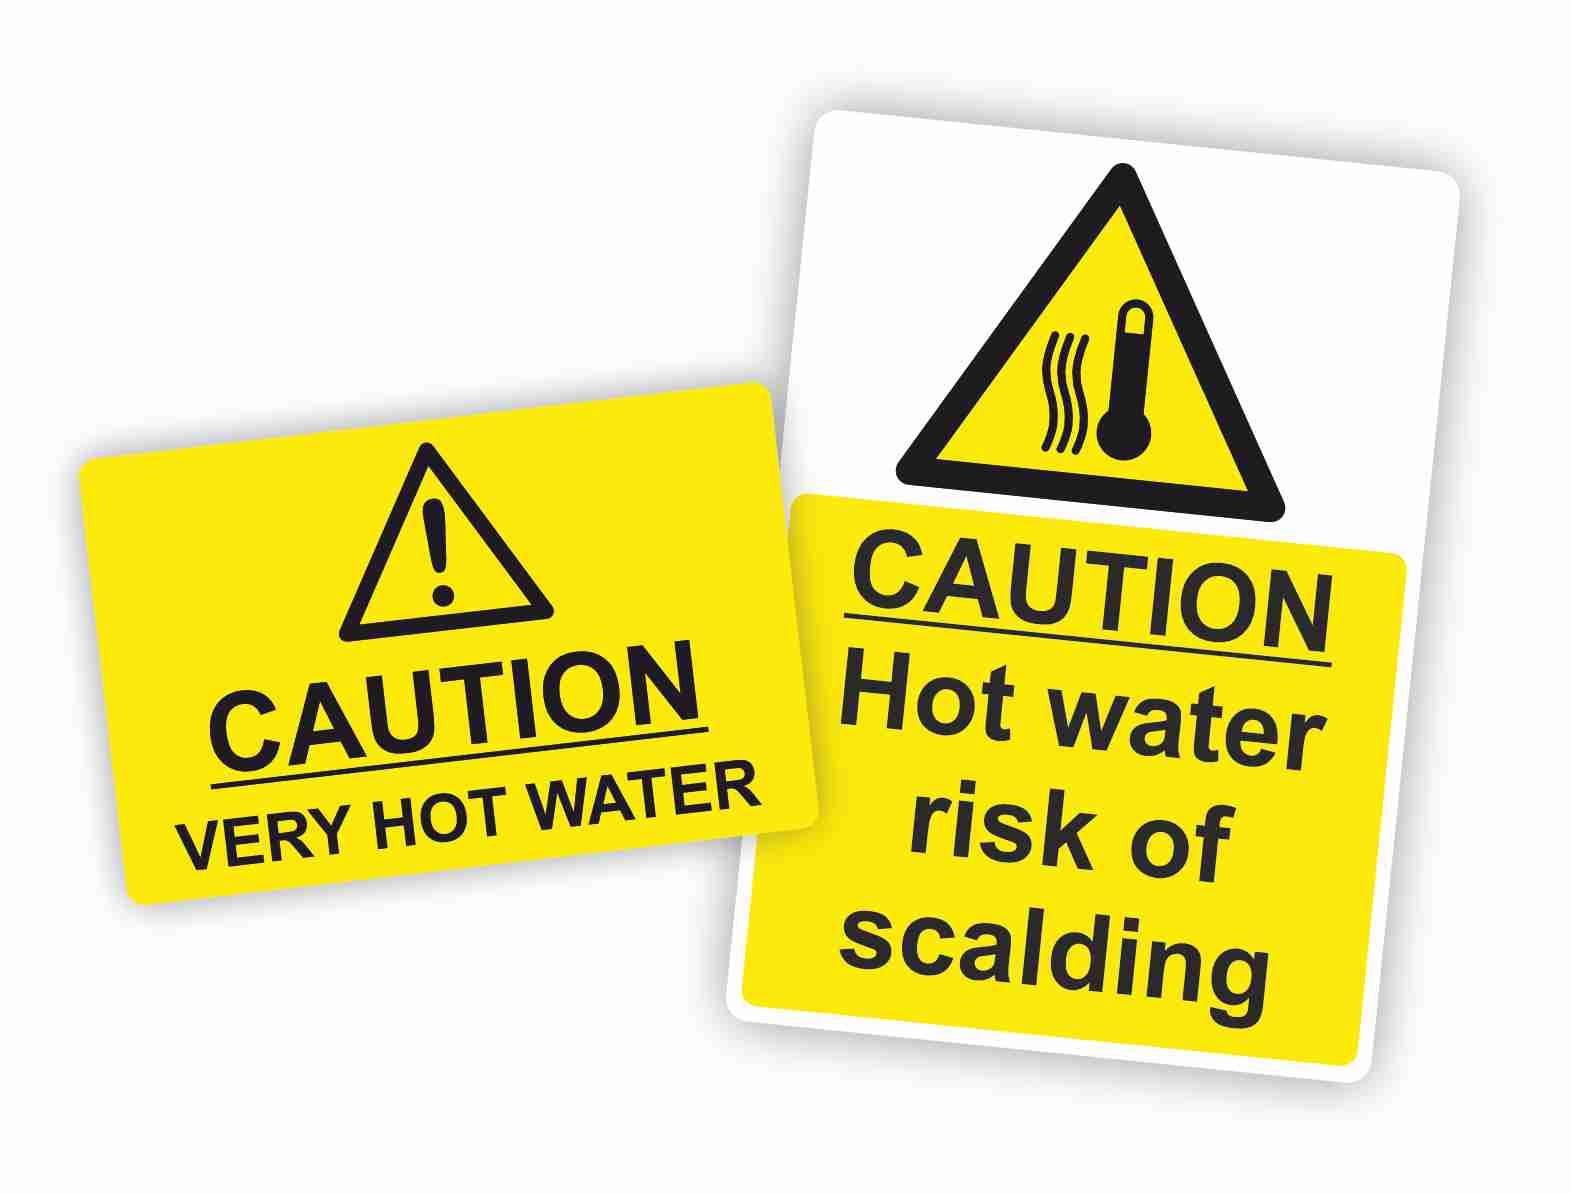 Plumbers warning labels